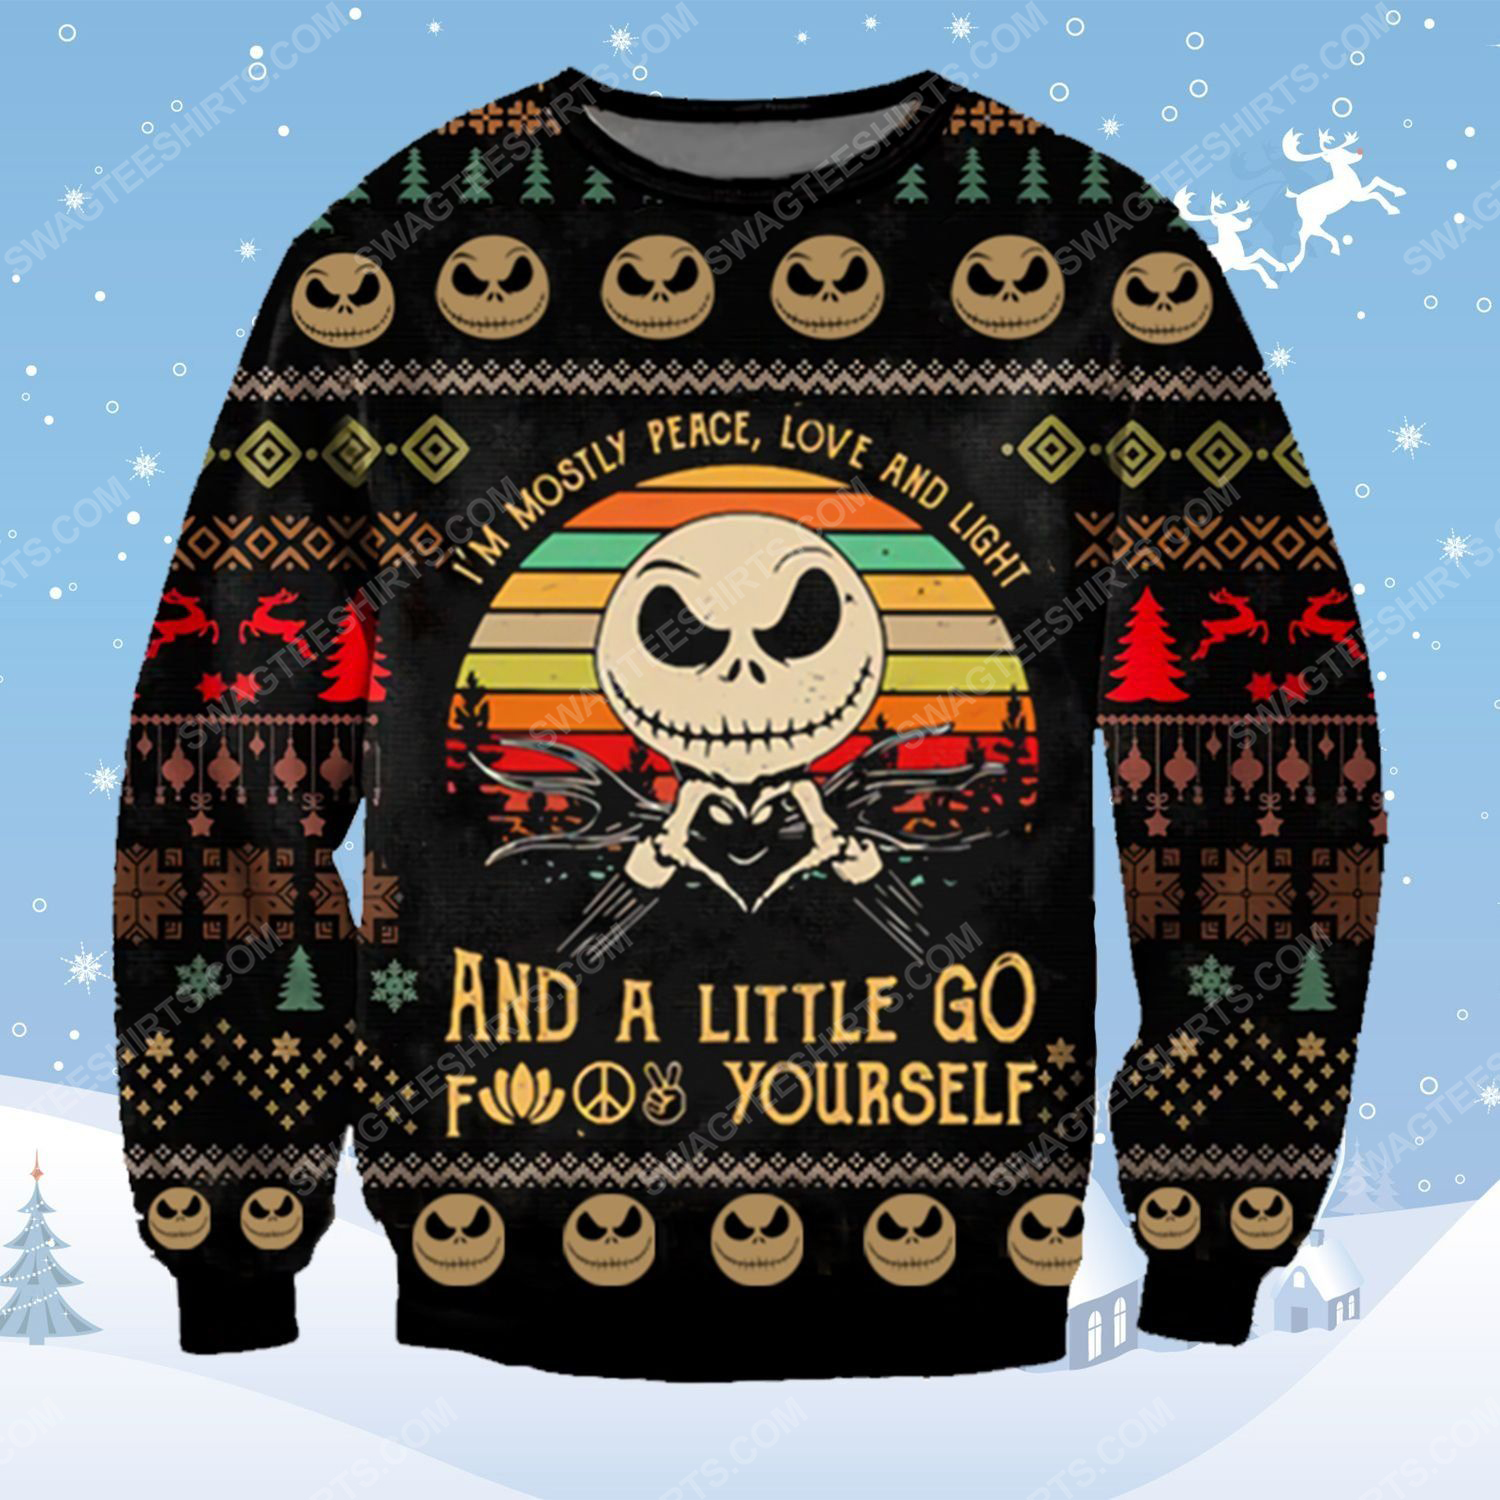 Jack skellington i'm mostly peace love and light ​ugly christmas sweater - Copy (2)